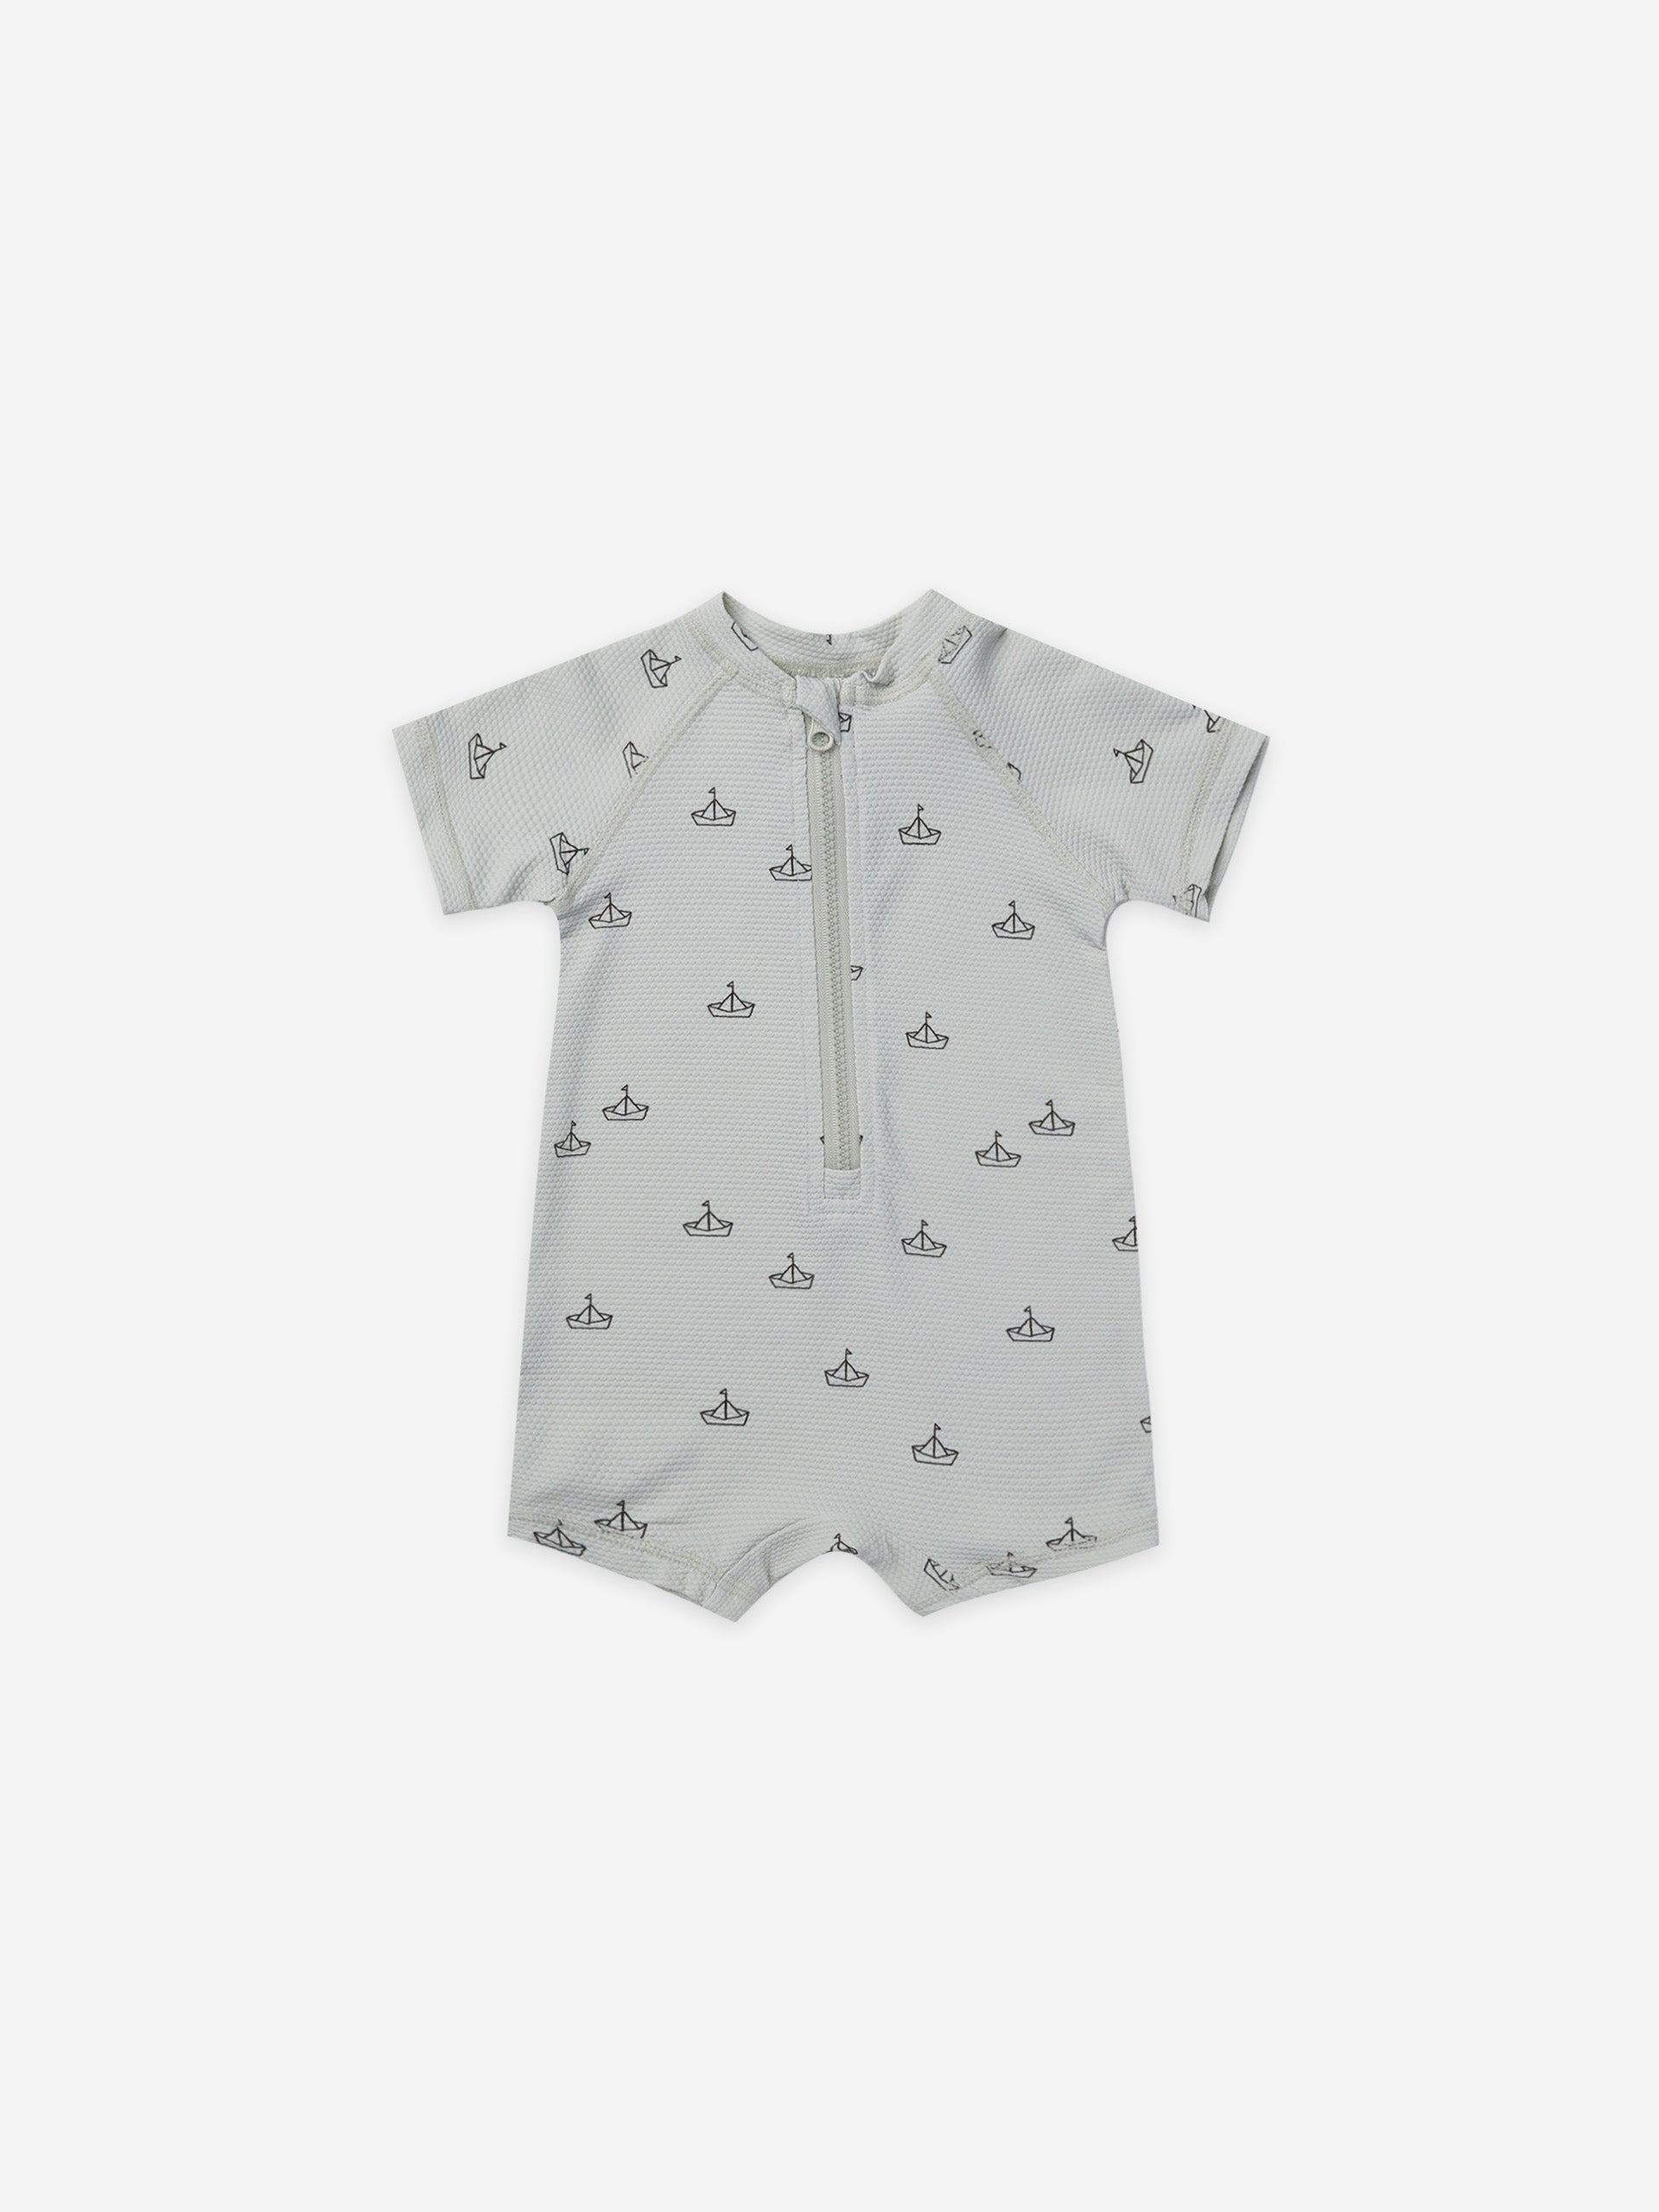 boys zip rashguard | boats - Quincy Mae | Baby Basics | Baby Clothing | Organic Baby Clothes | Modern Baby Boy Clothes |